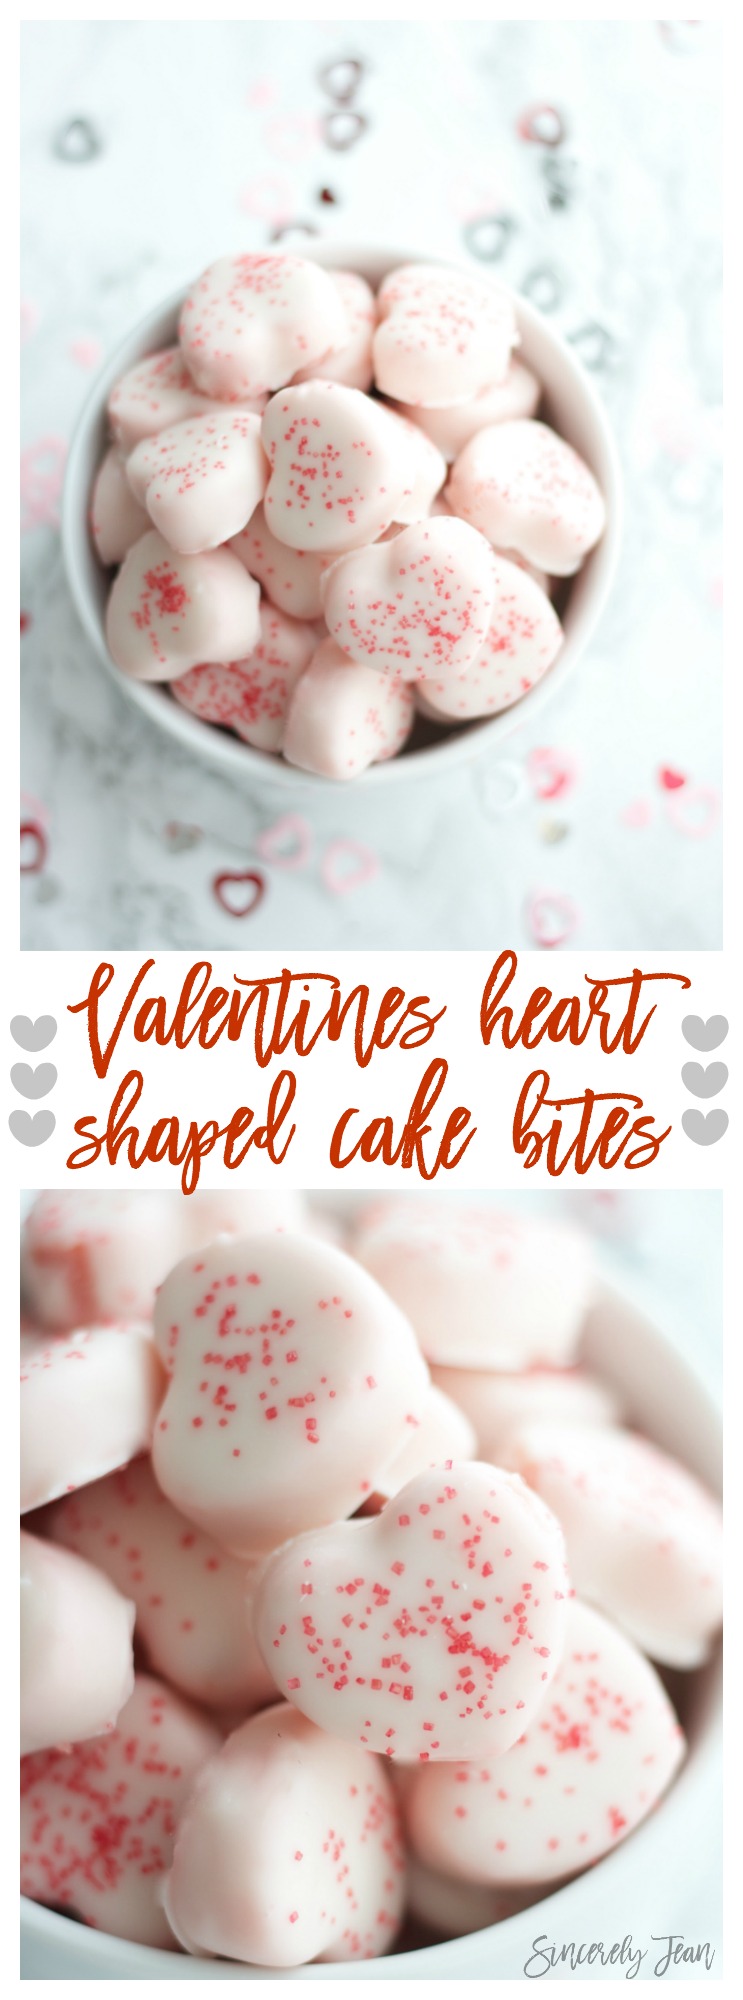 Valentines heart shaped cake bites - valentines dessert easy simple cake bites